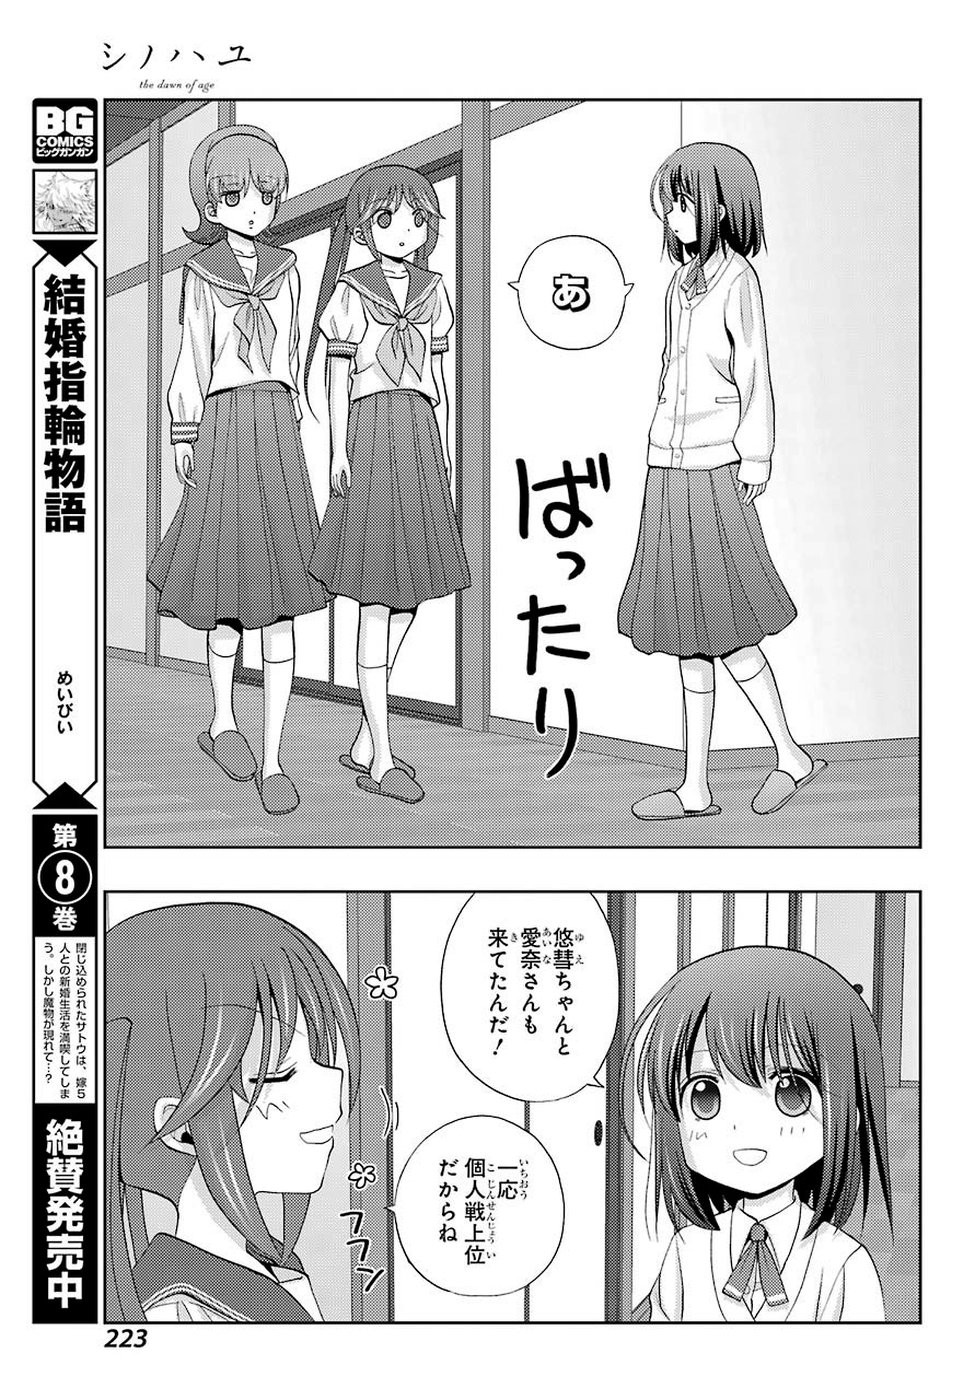 Shinohayu - The Dawn of Age Manga - Chapter 073 - Page 23